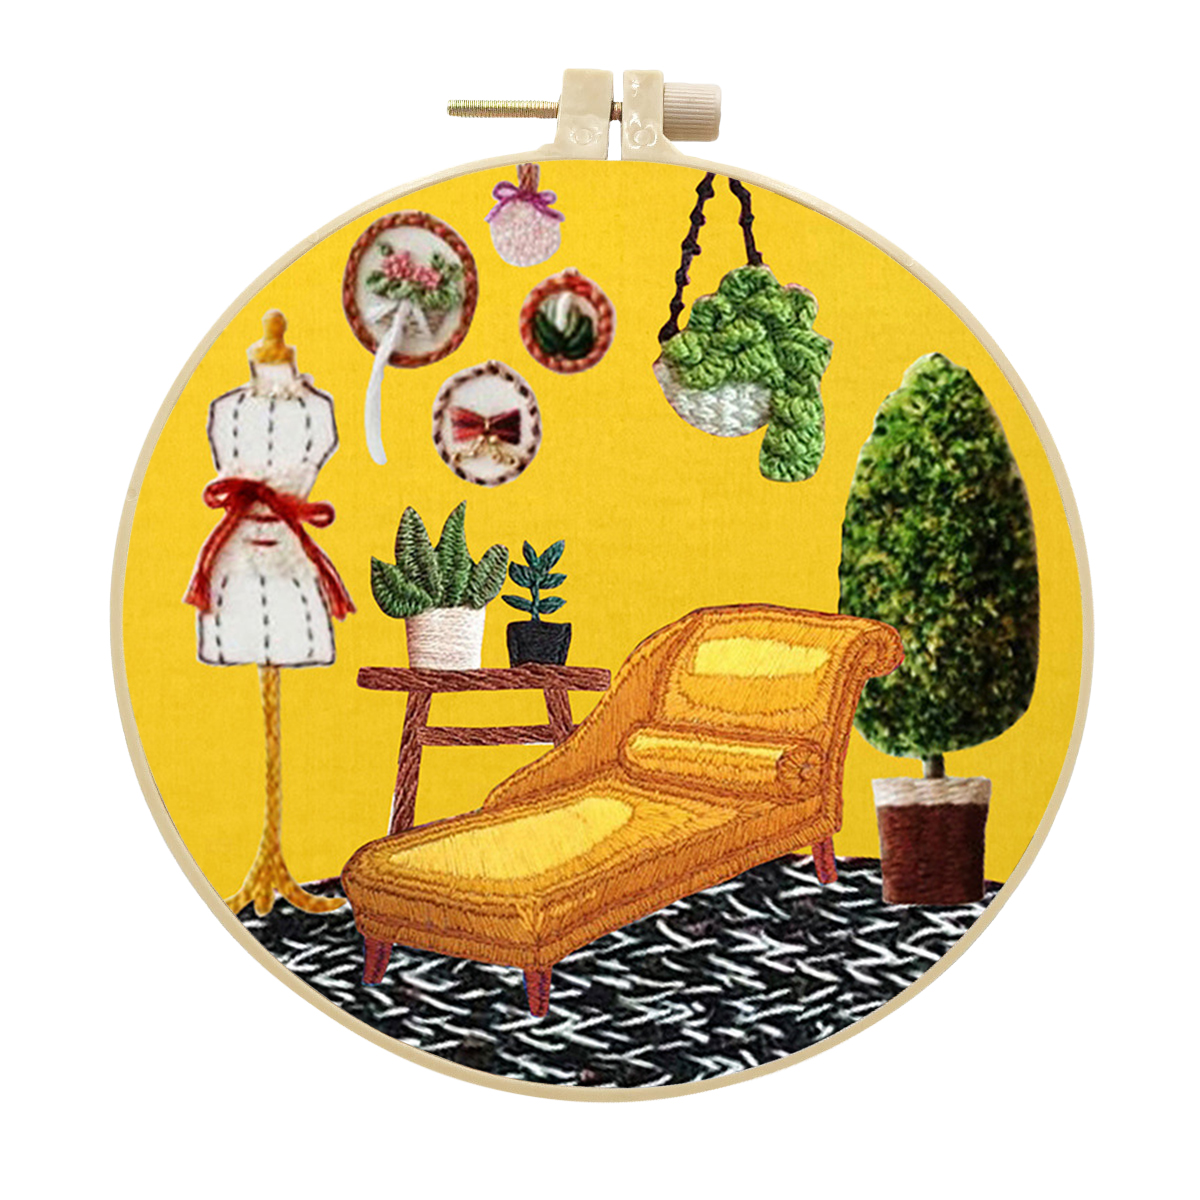 Handmade Embroidery Kit Cross stitch kit for Adult Beginner - Yellow sofa bedroom Pattern